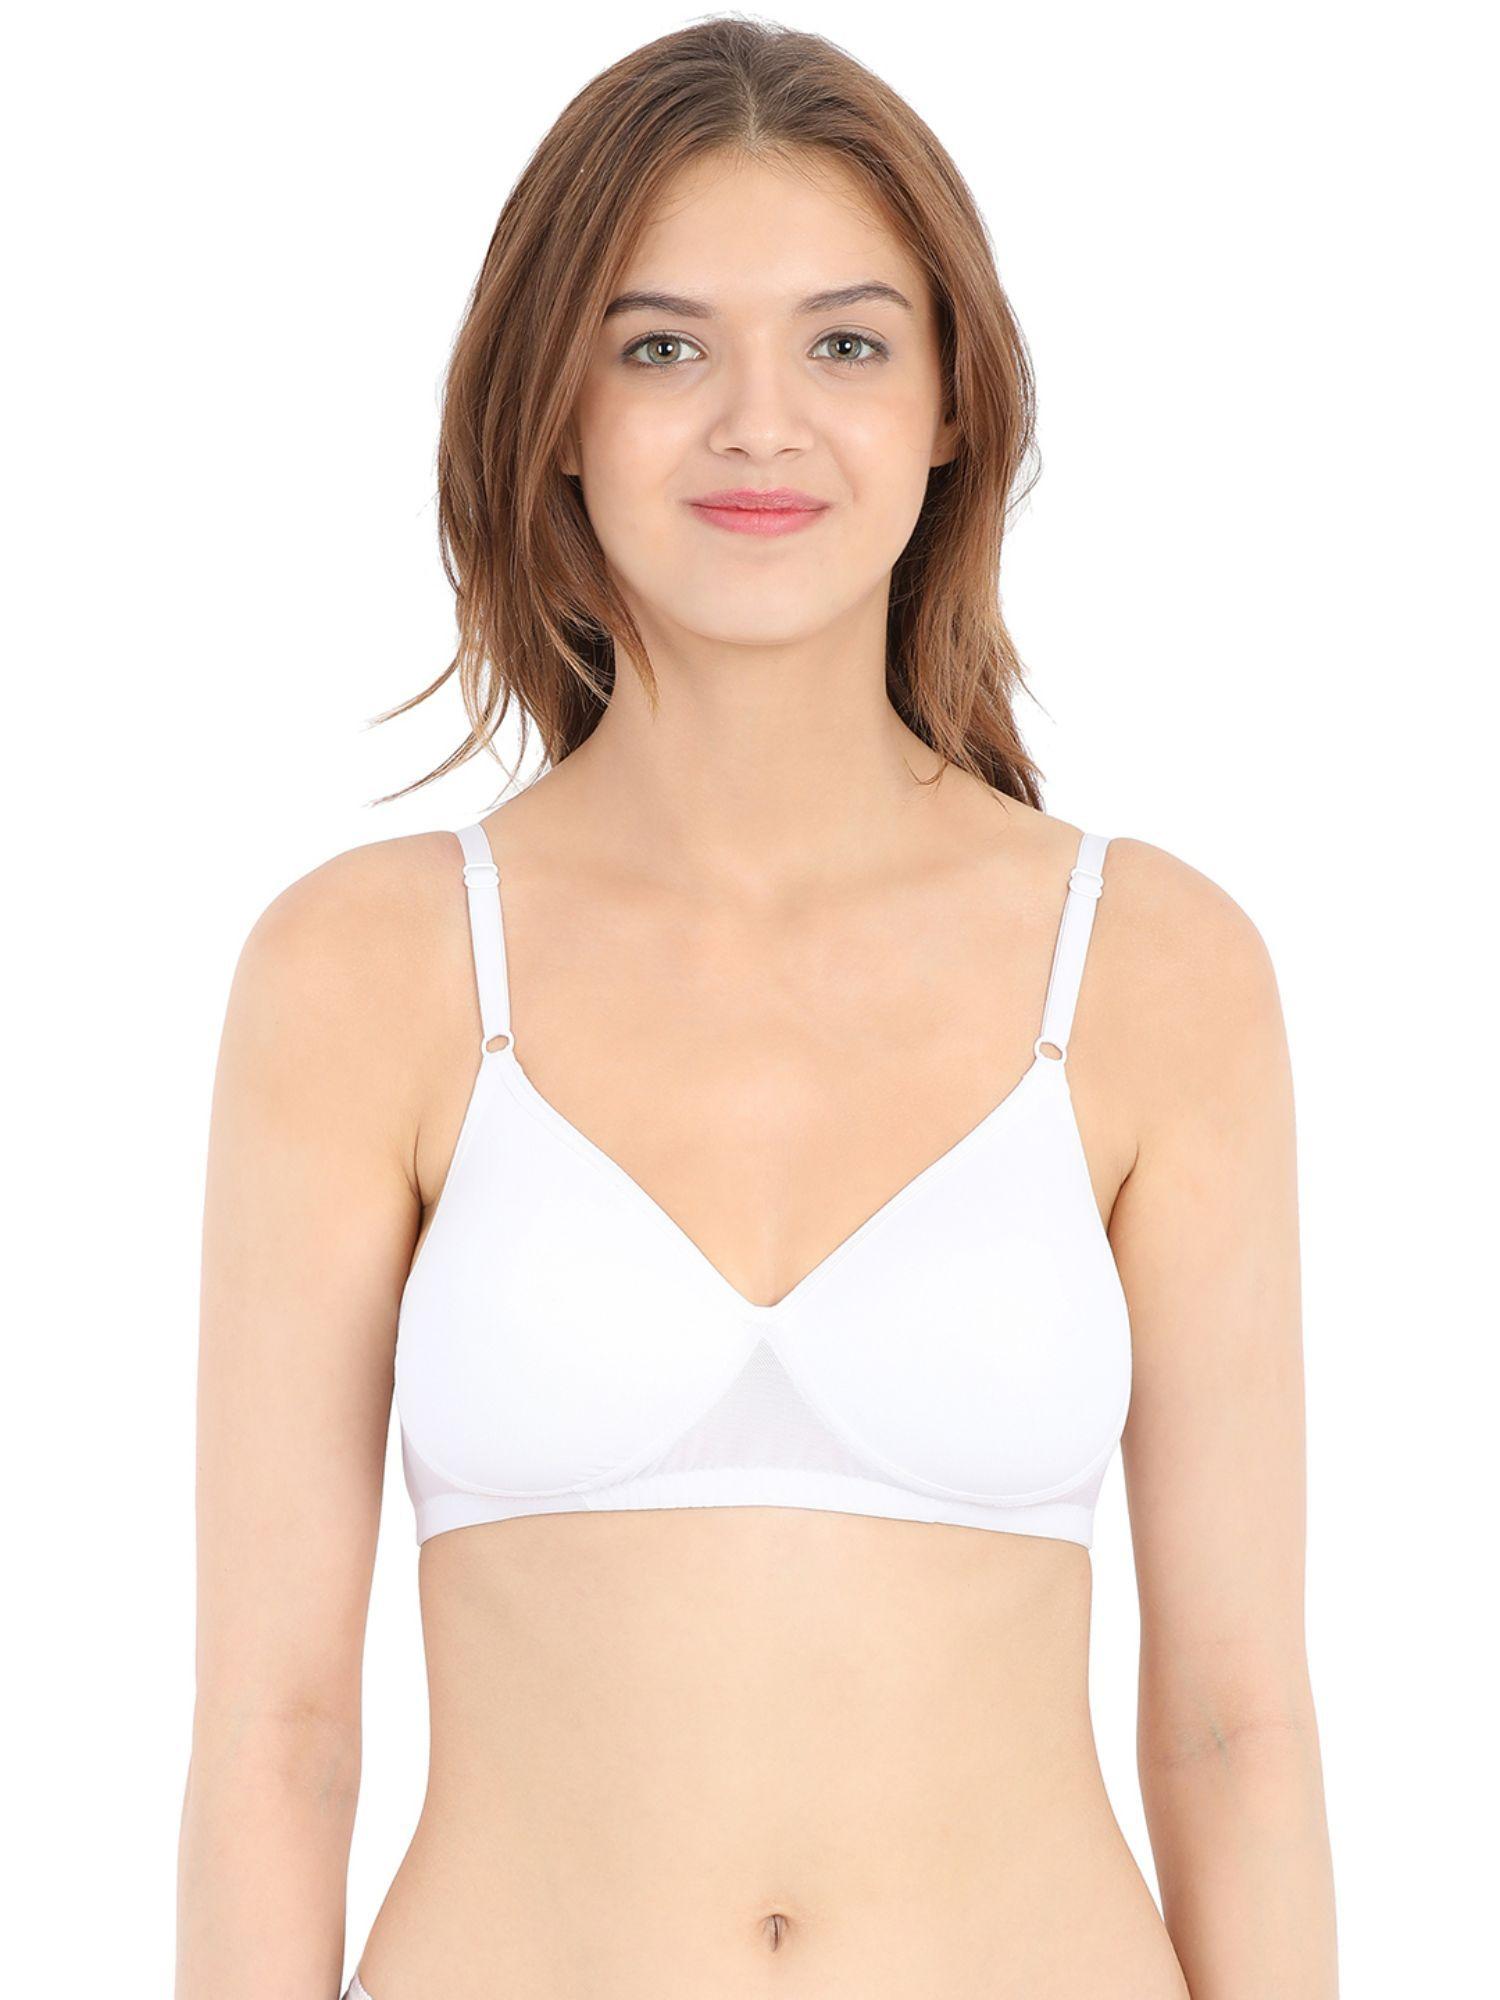 padded non-wired t-shirt bra - white